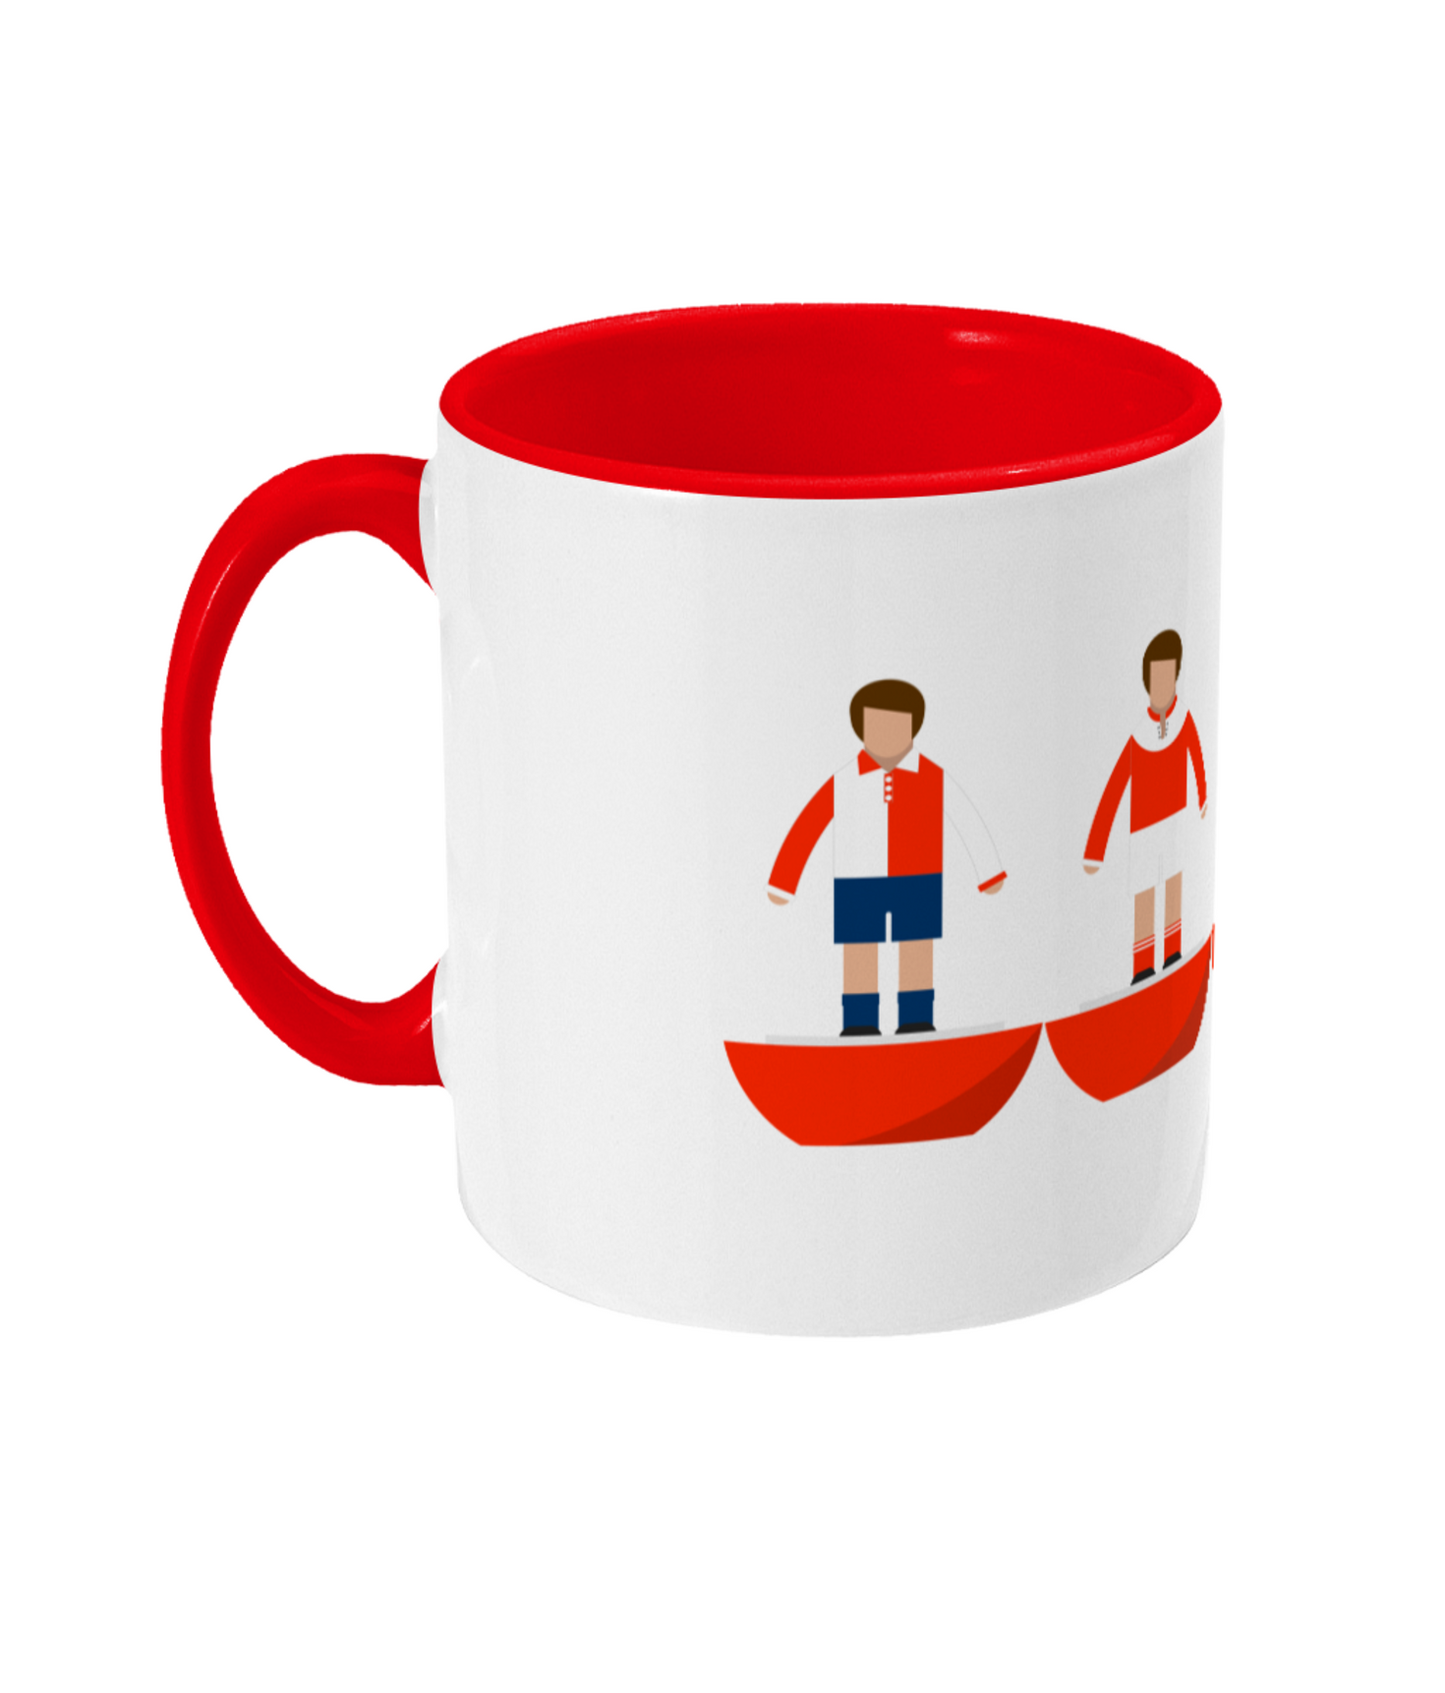 Football Kits 'Walsall combined' Mug